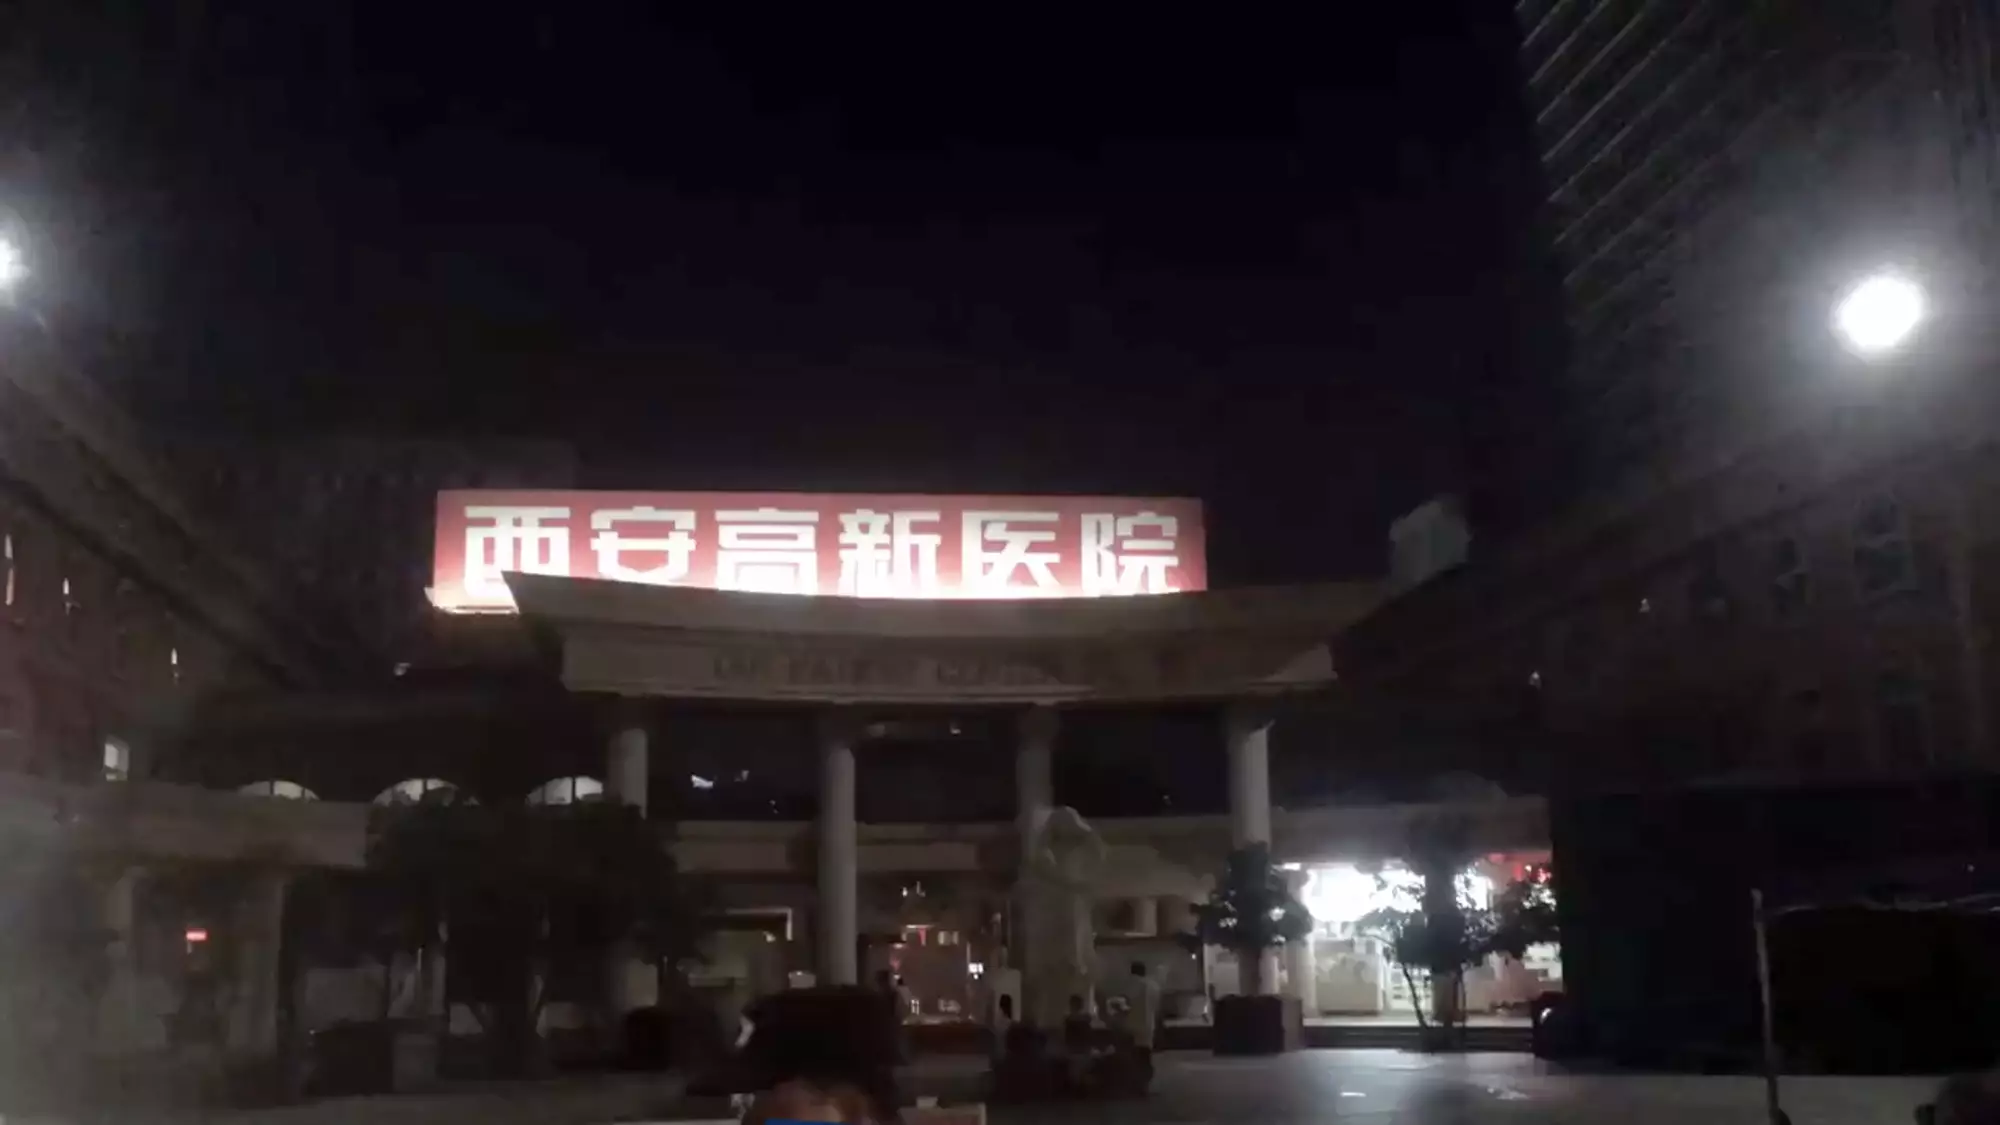 Xi'an Gaoxin Hospital in Shaanxi, China.